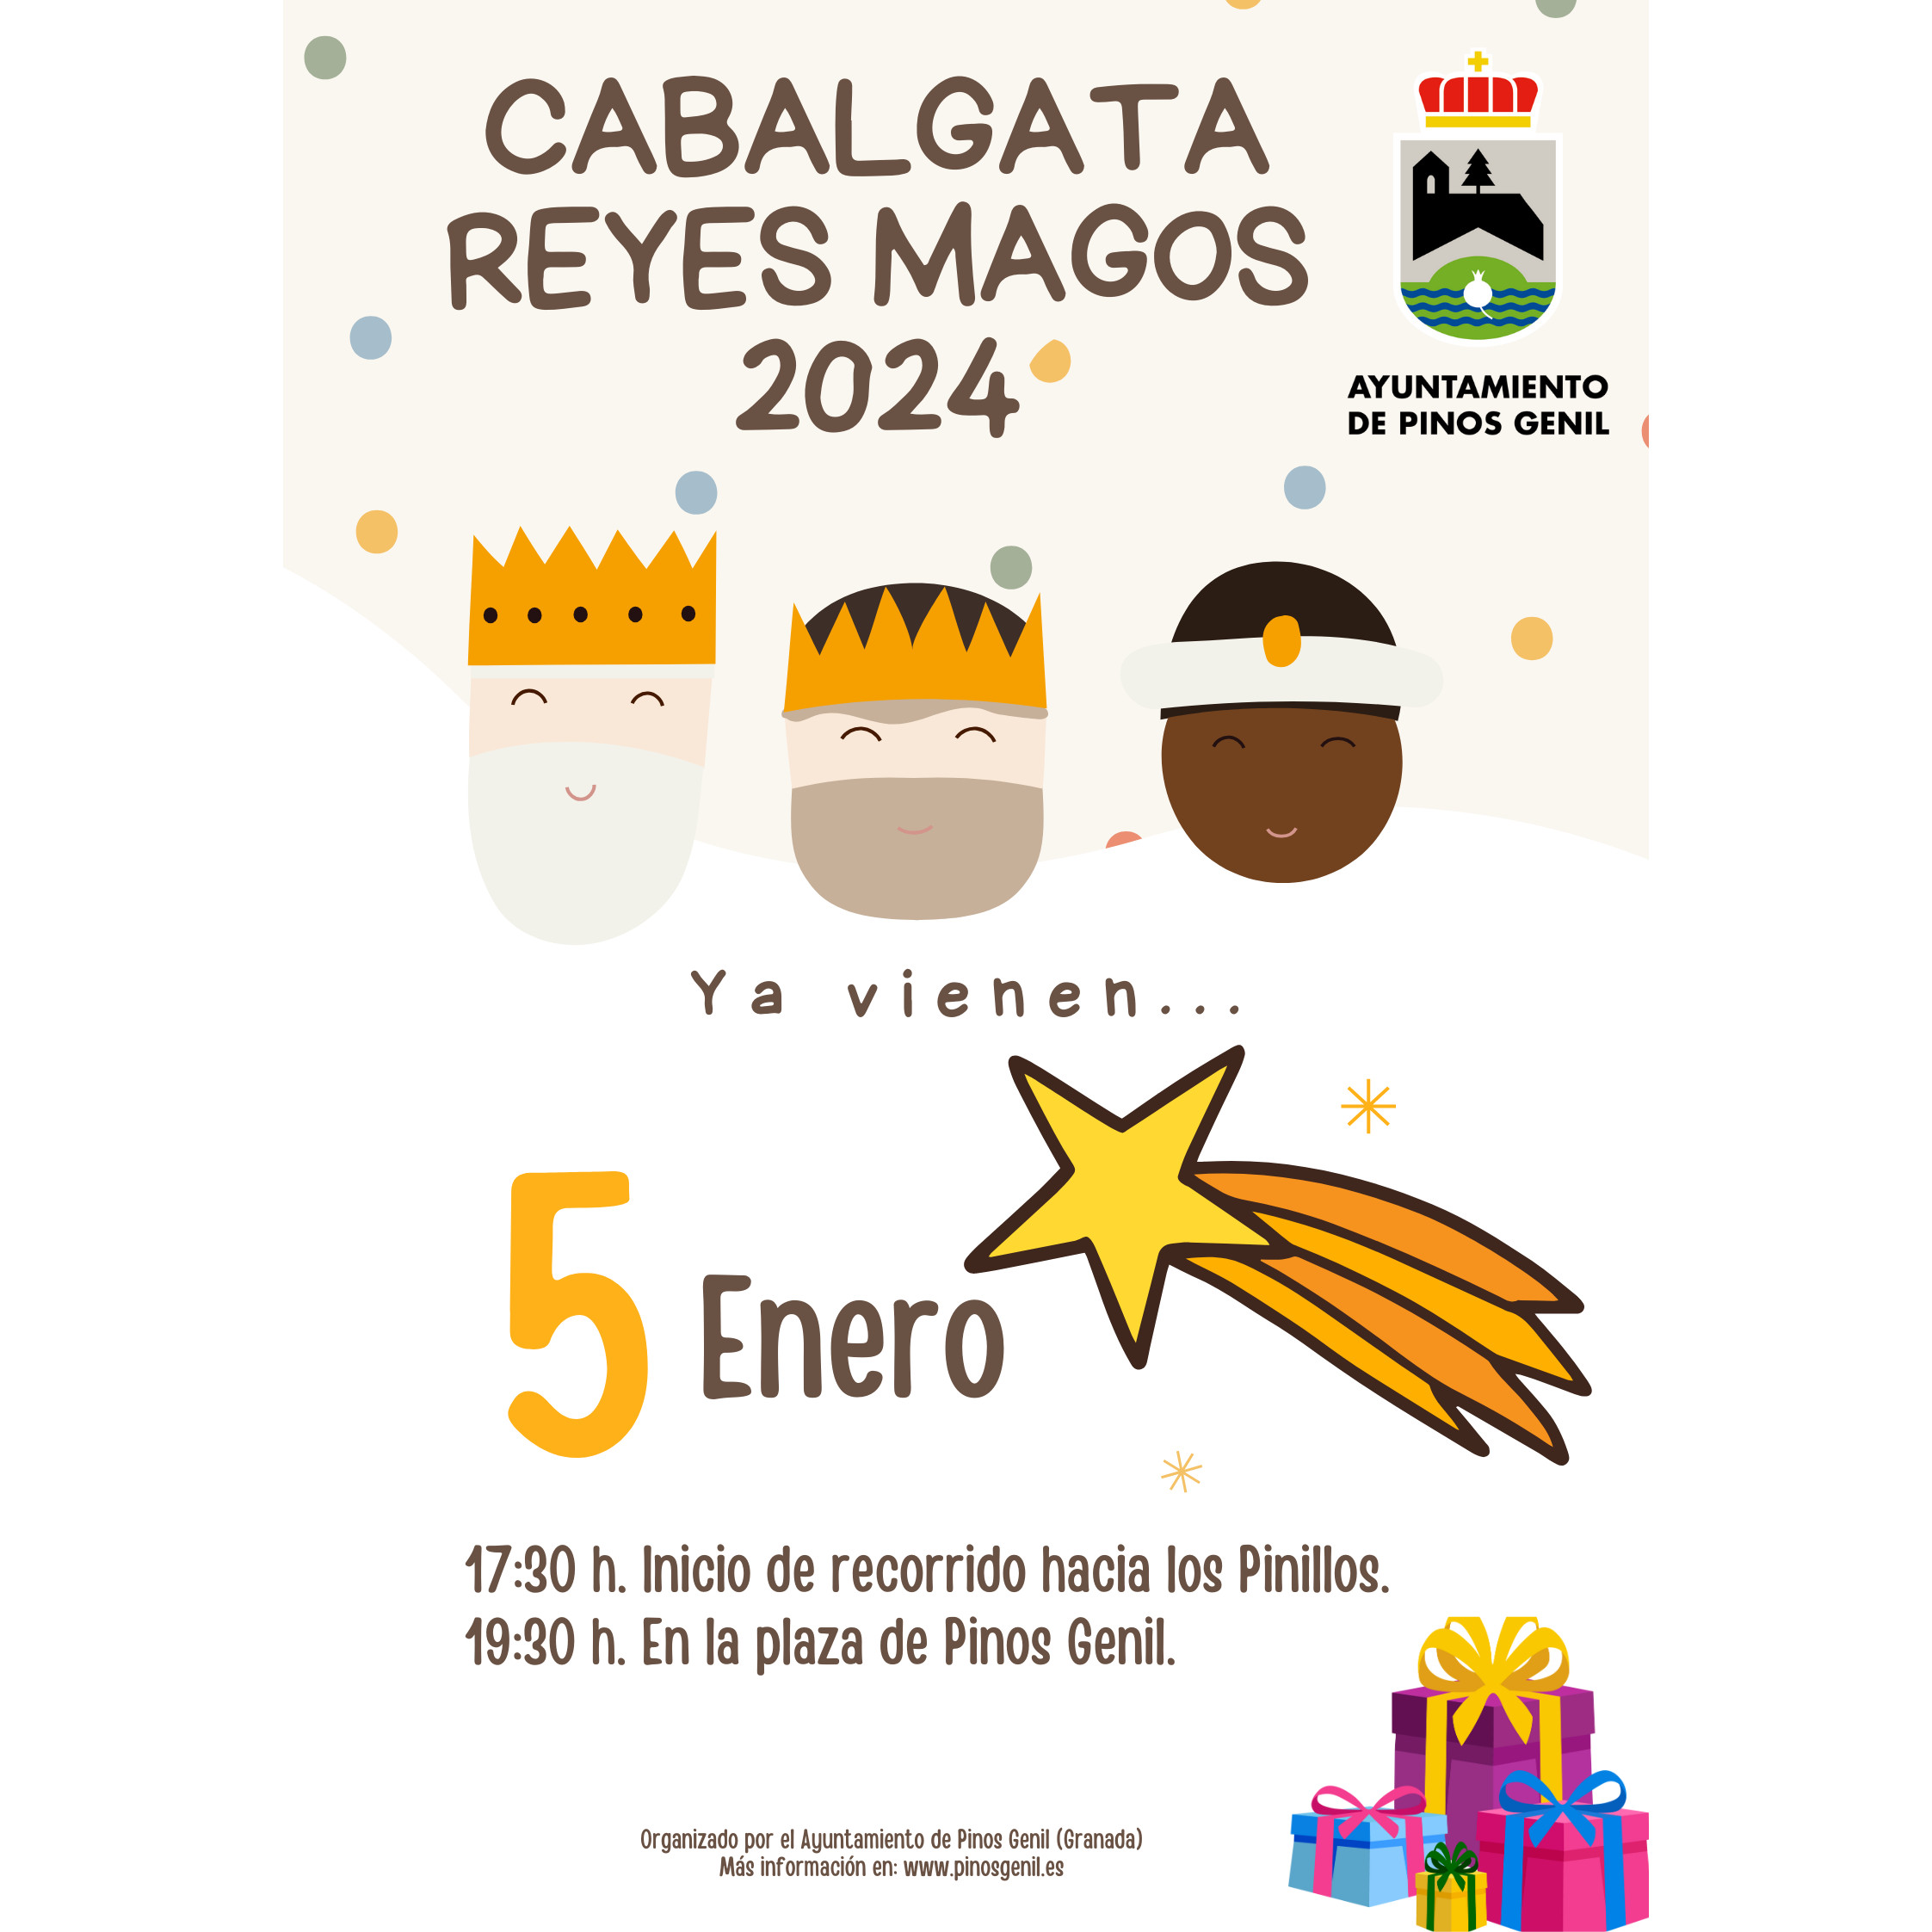 Cabalgata Reyes Magos 2024 - Suspendida